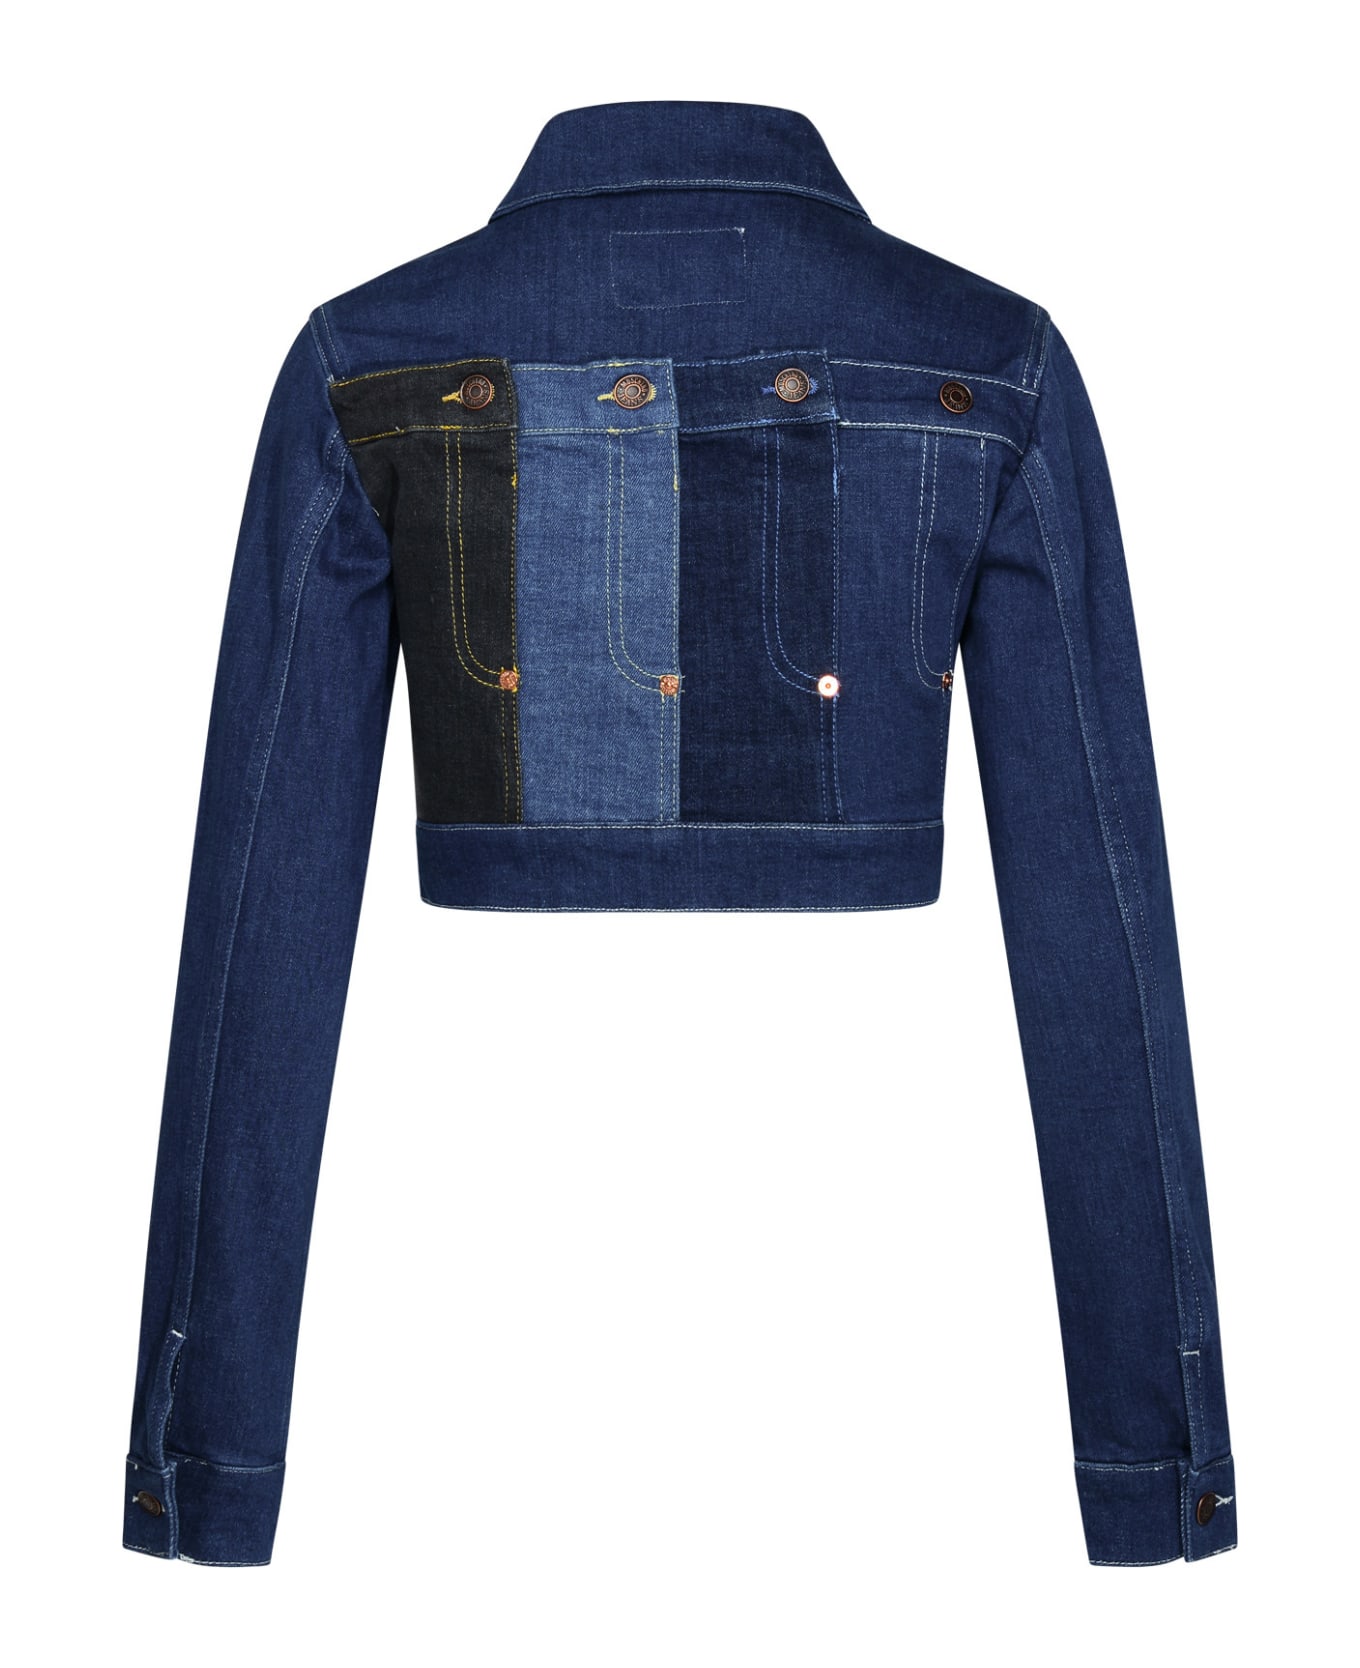 M05CH1N0 Jeans Blue Cotton Jacket - Blu denim